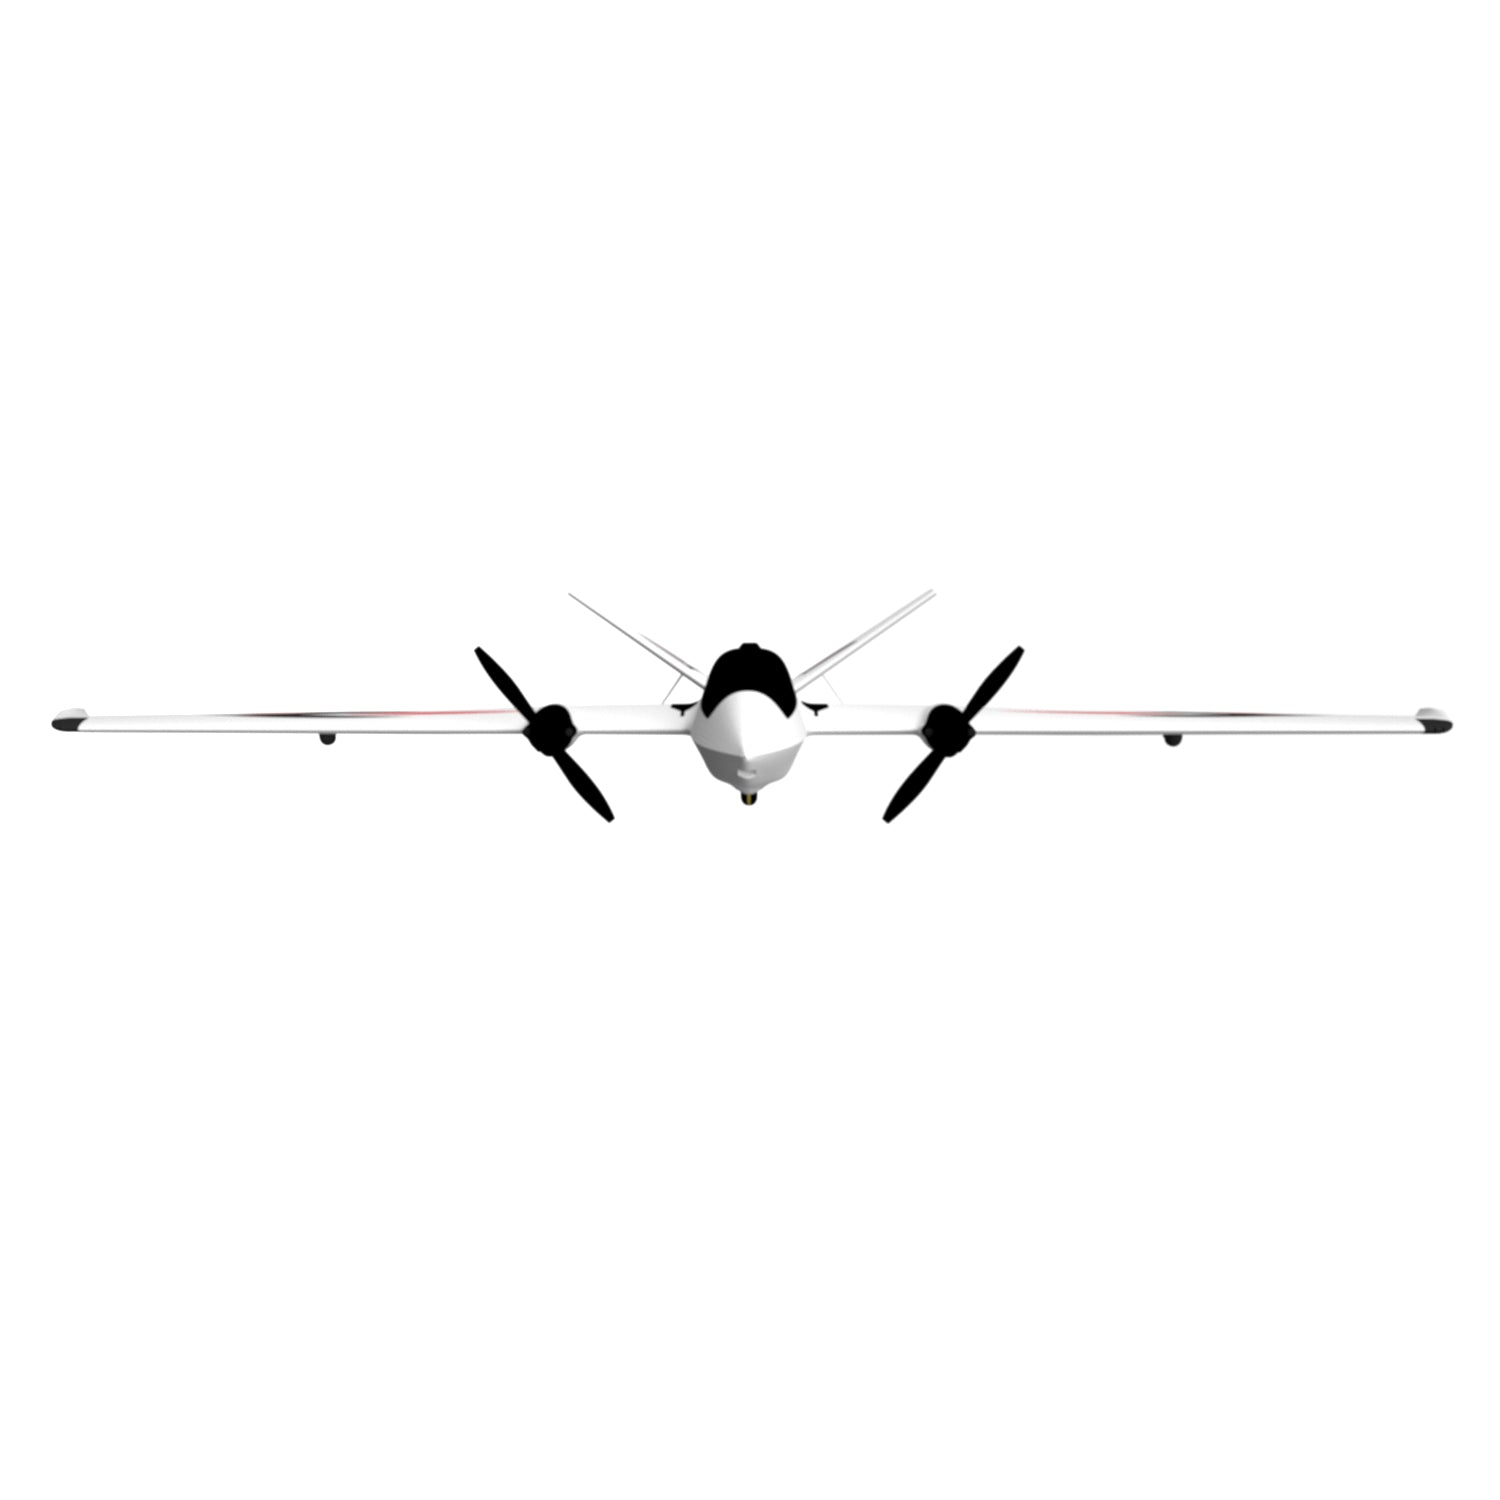 Atomrc Swordfish FPV Fixed Wing